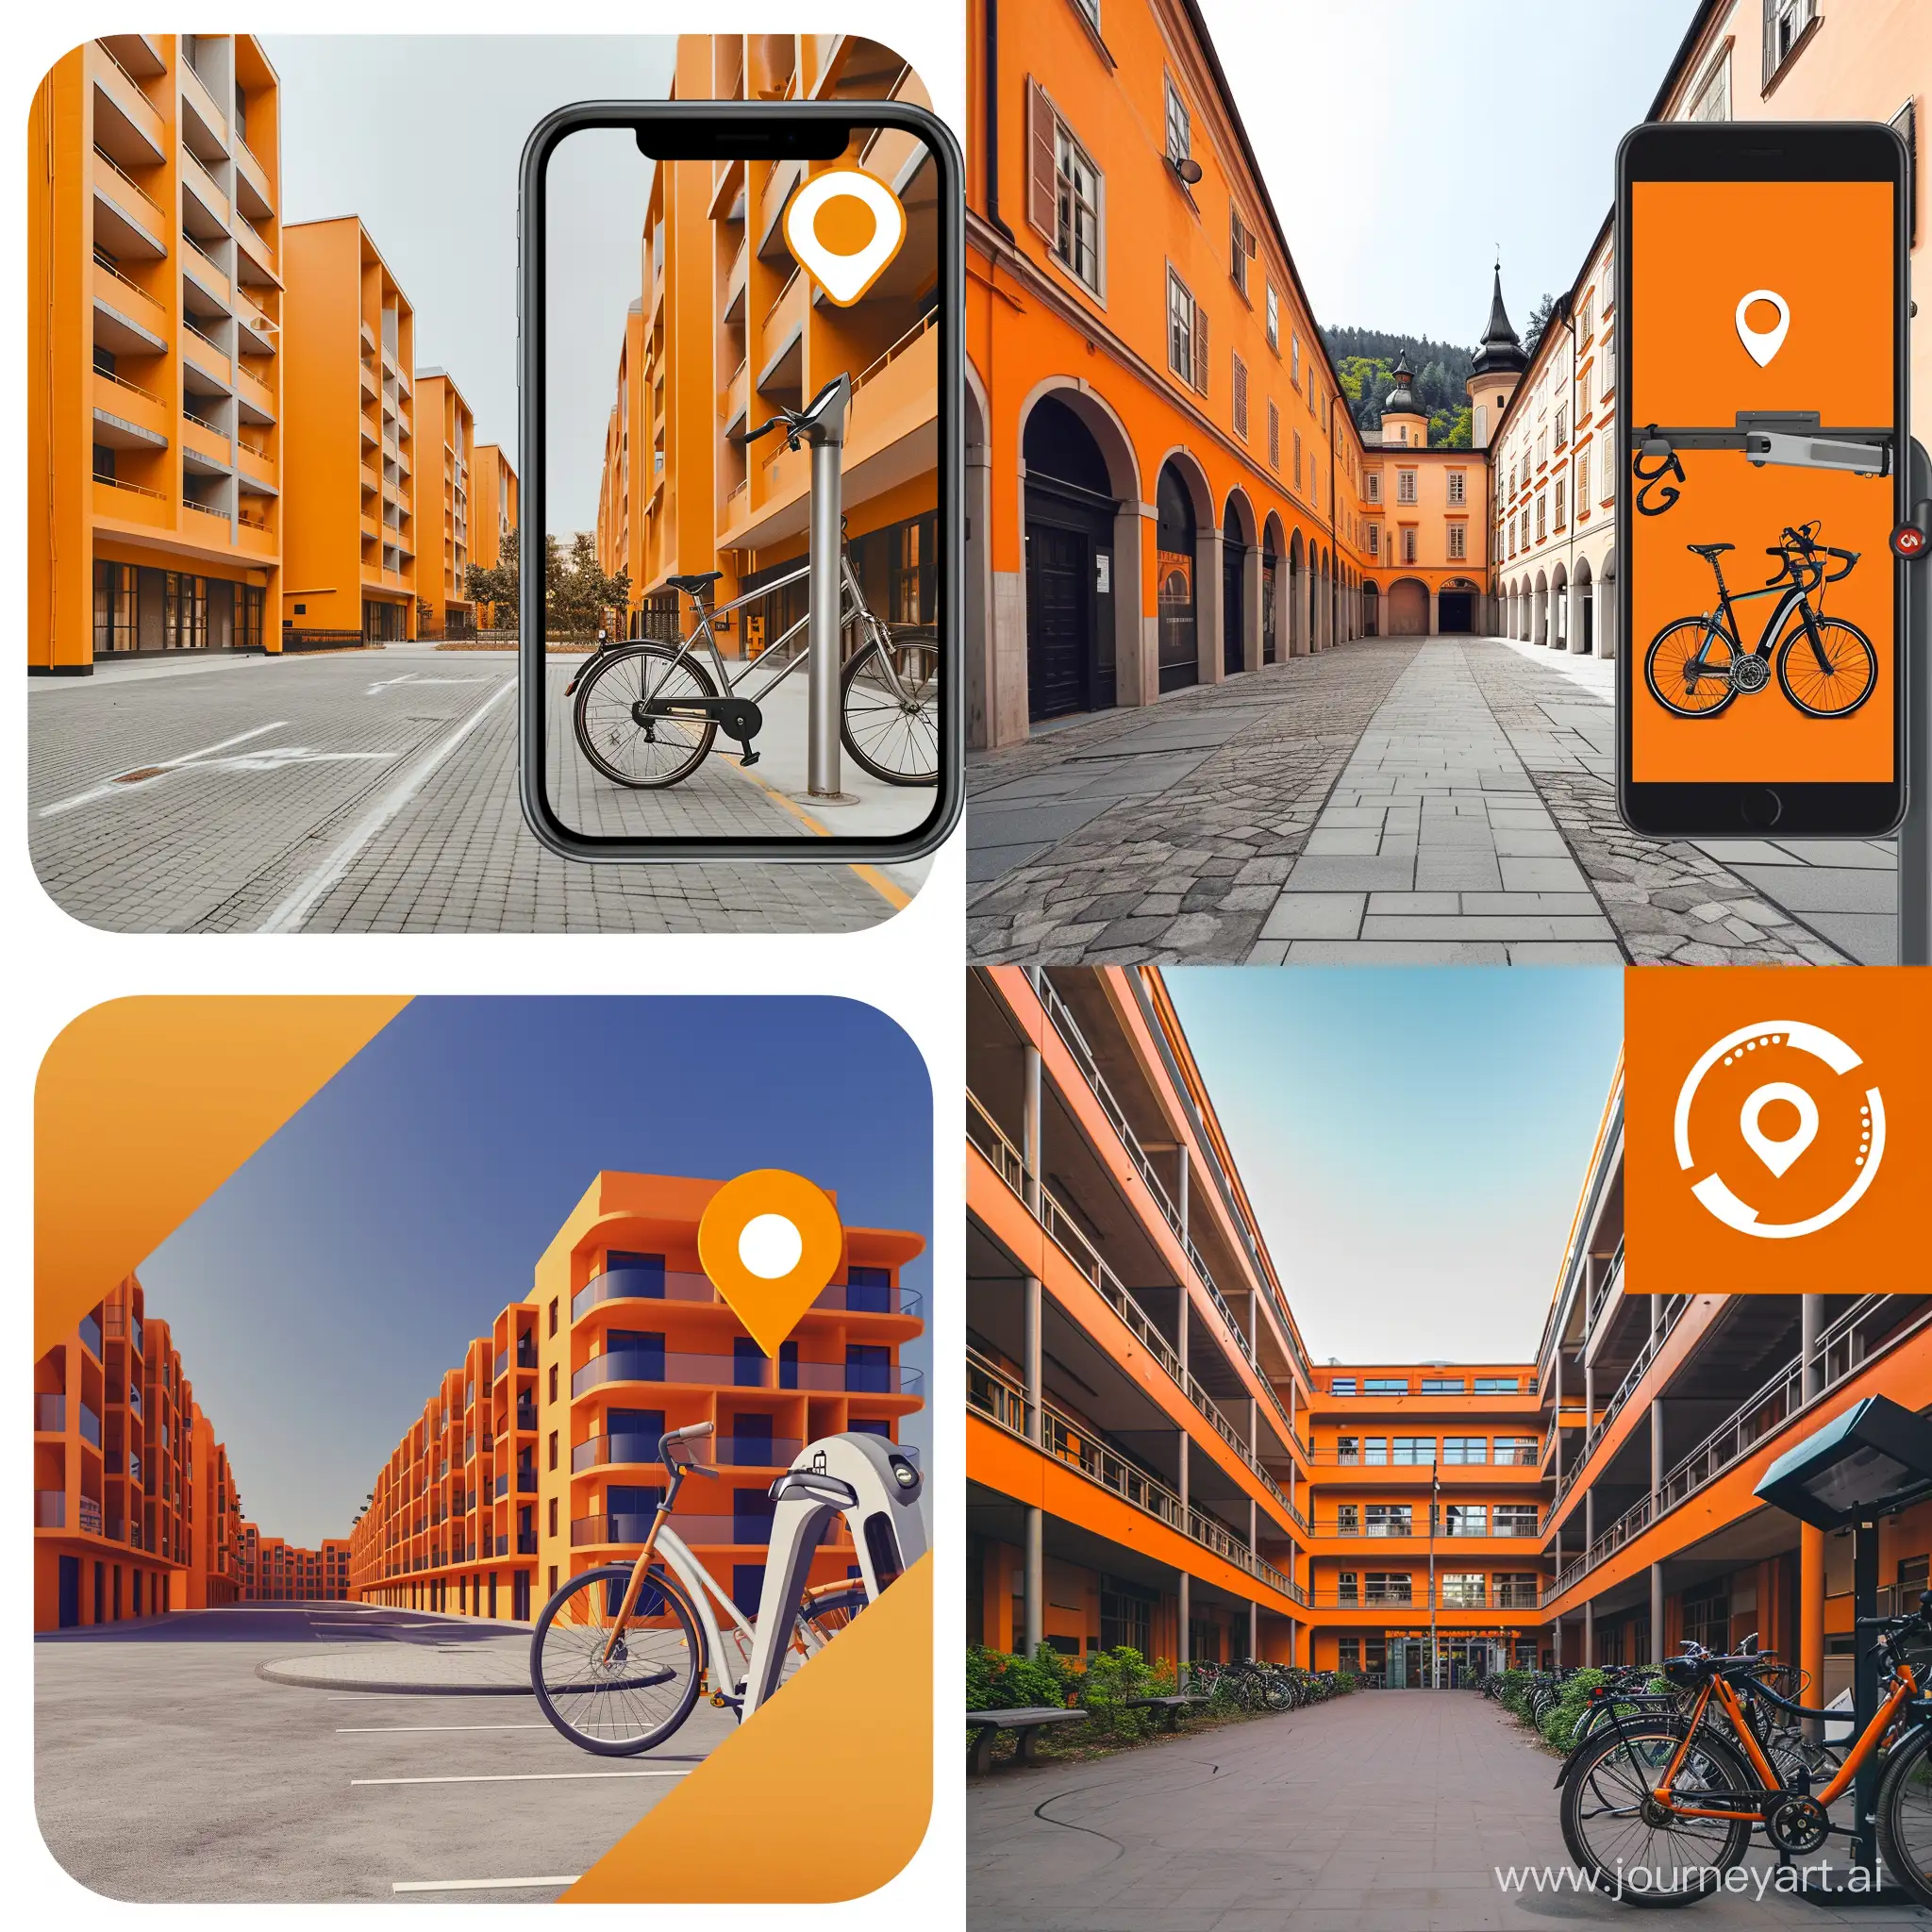 University-Bike-Rental-Station-with-Iconic-Orange-Buildings